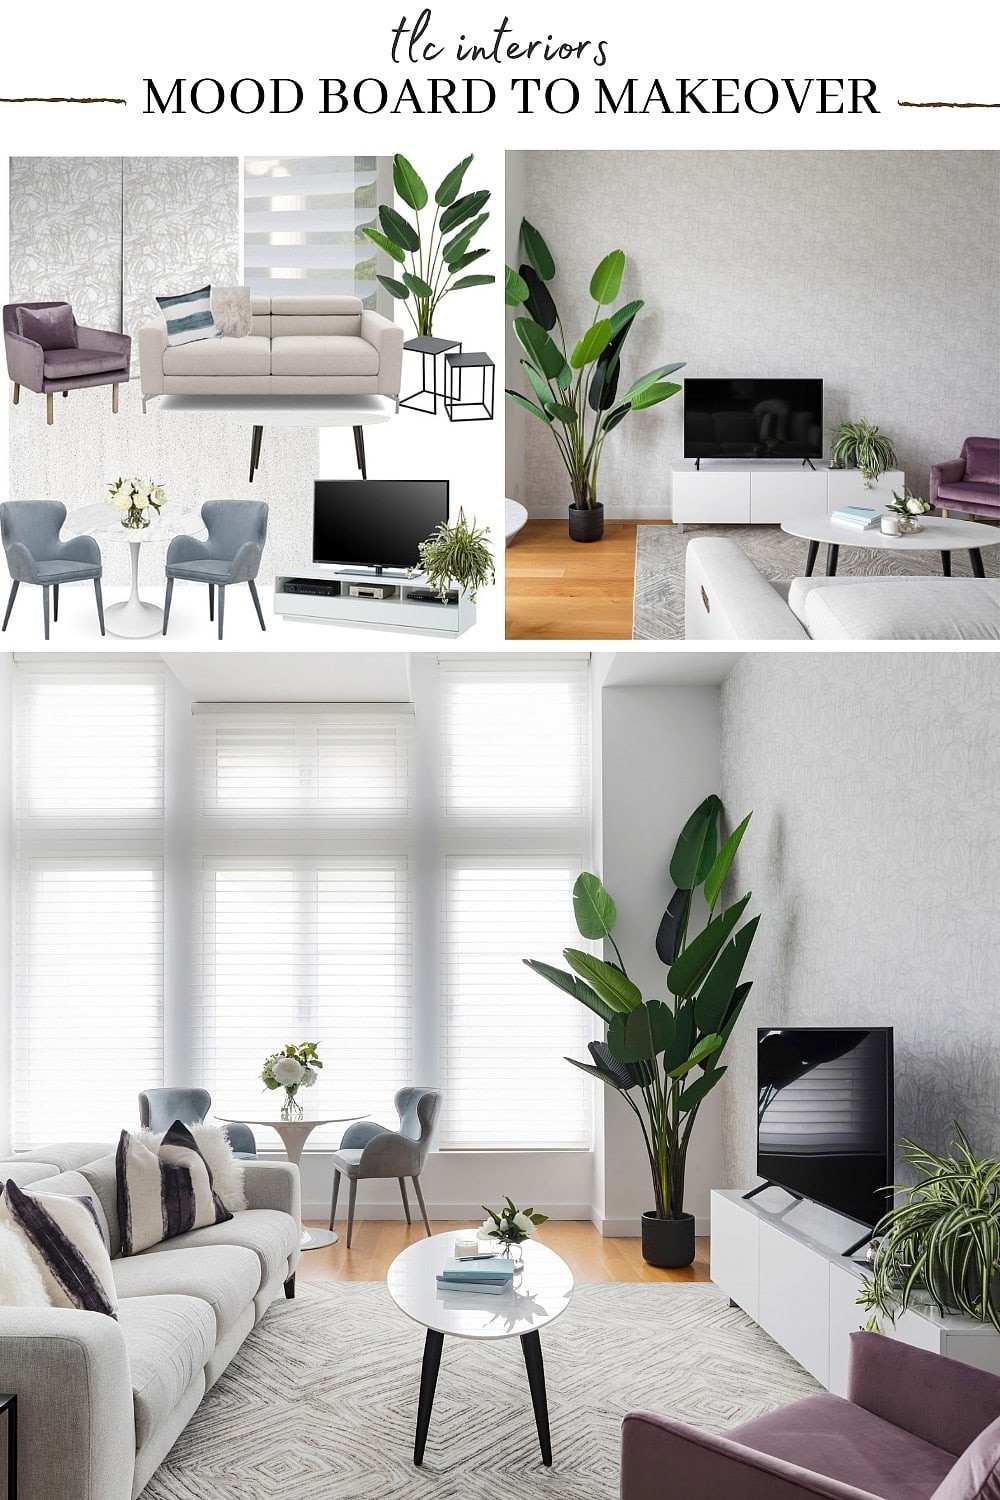 online mood board tool for interior designers white living room